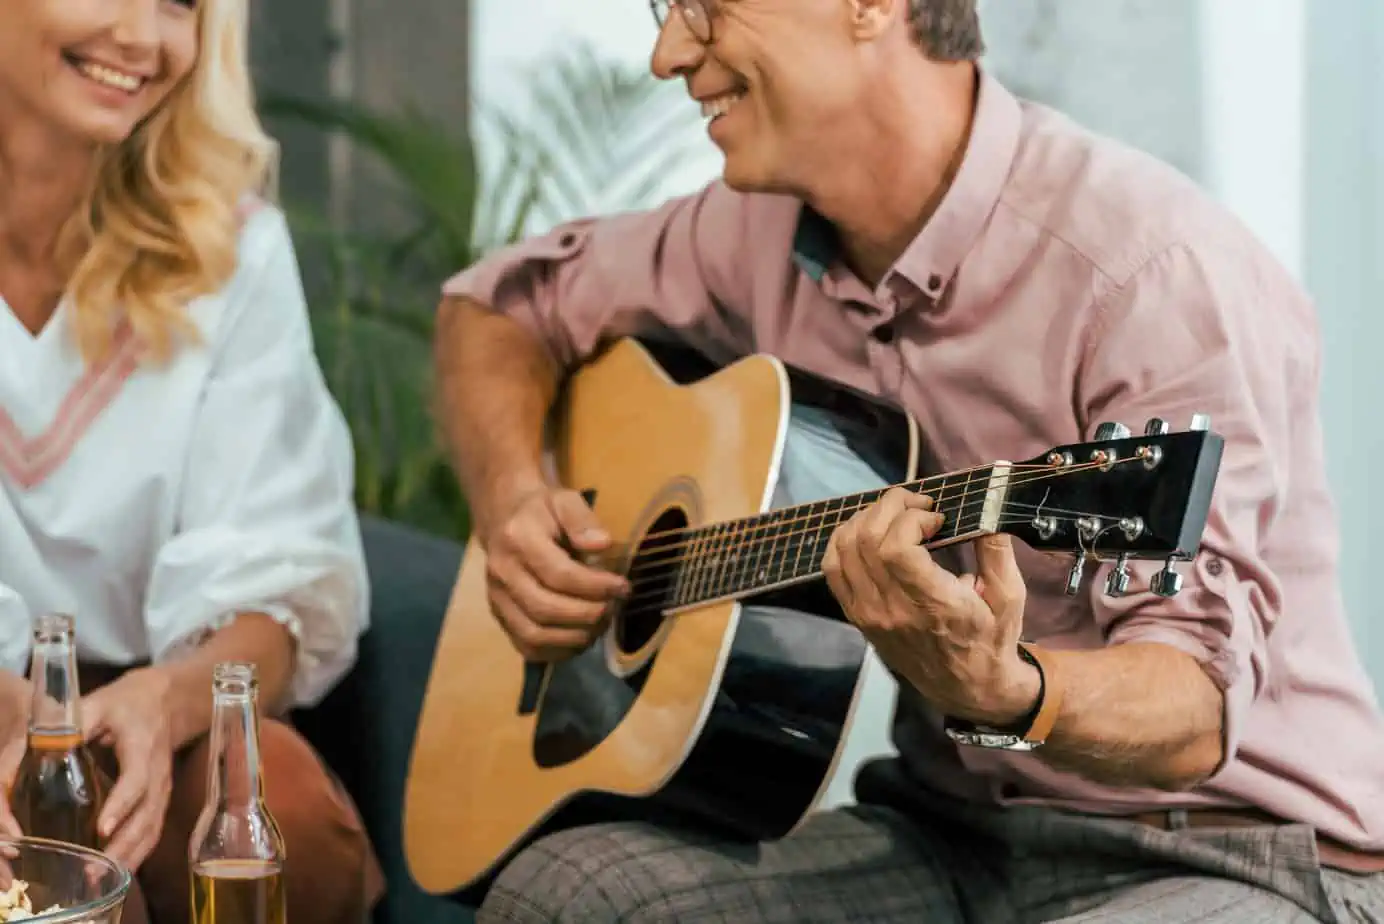 A man playing a guitar next to a woman